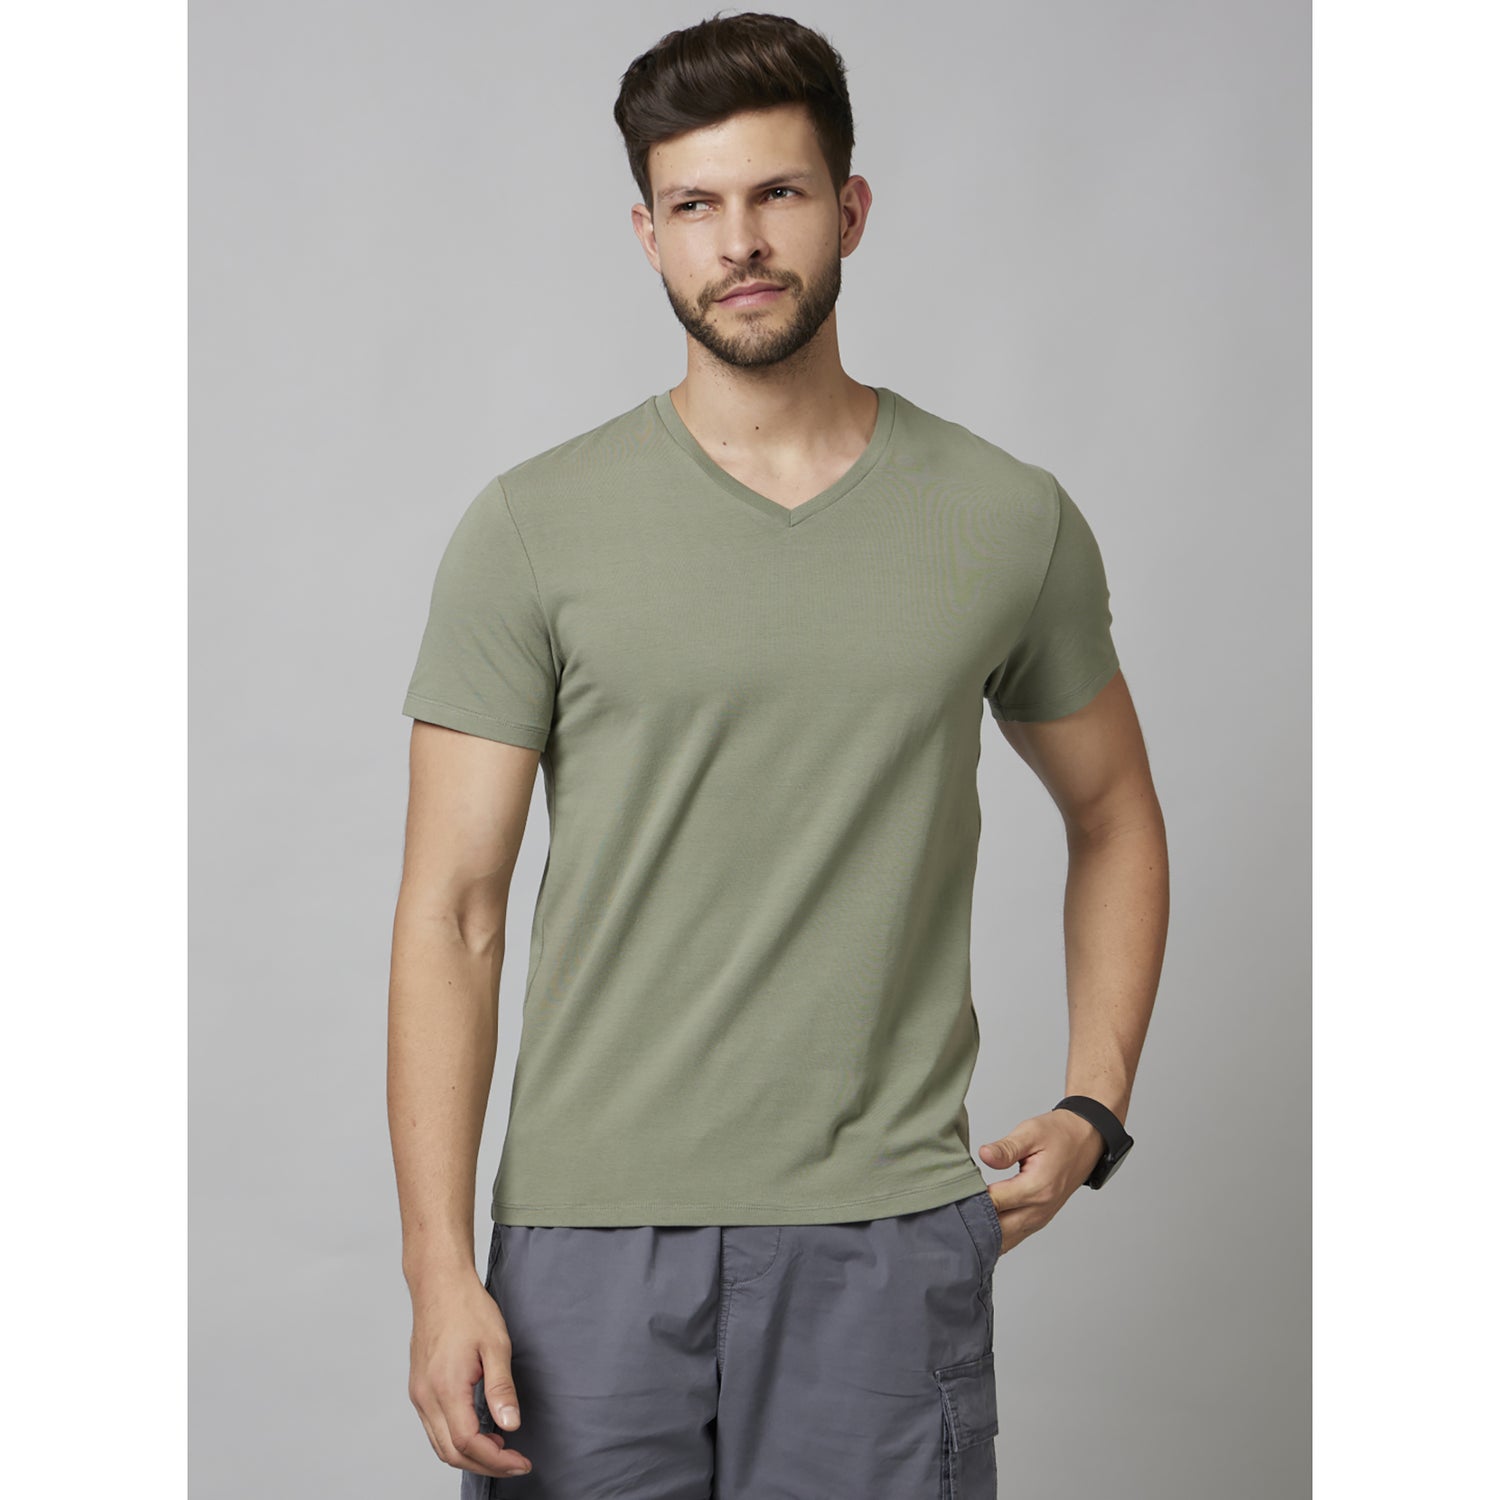 Khaki Solid Half Sleeve Cotton Blend T-Shirts (NEUNIV1)